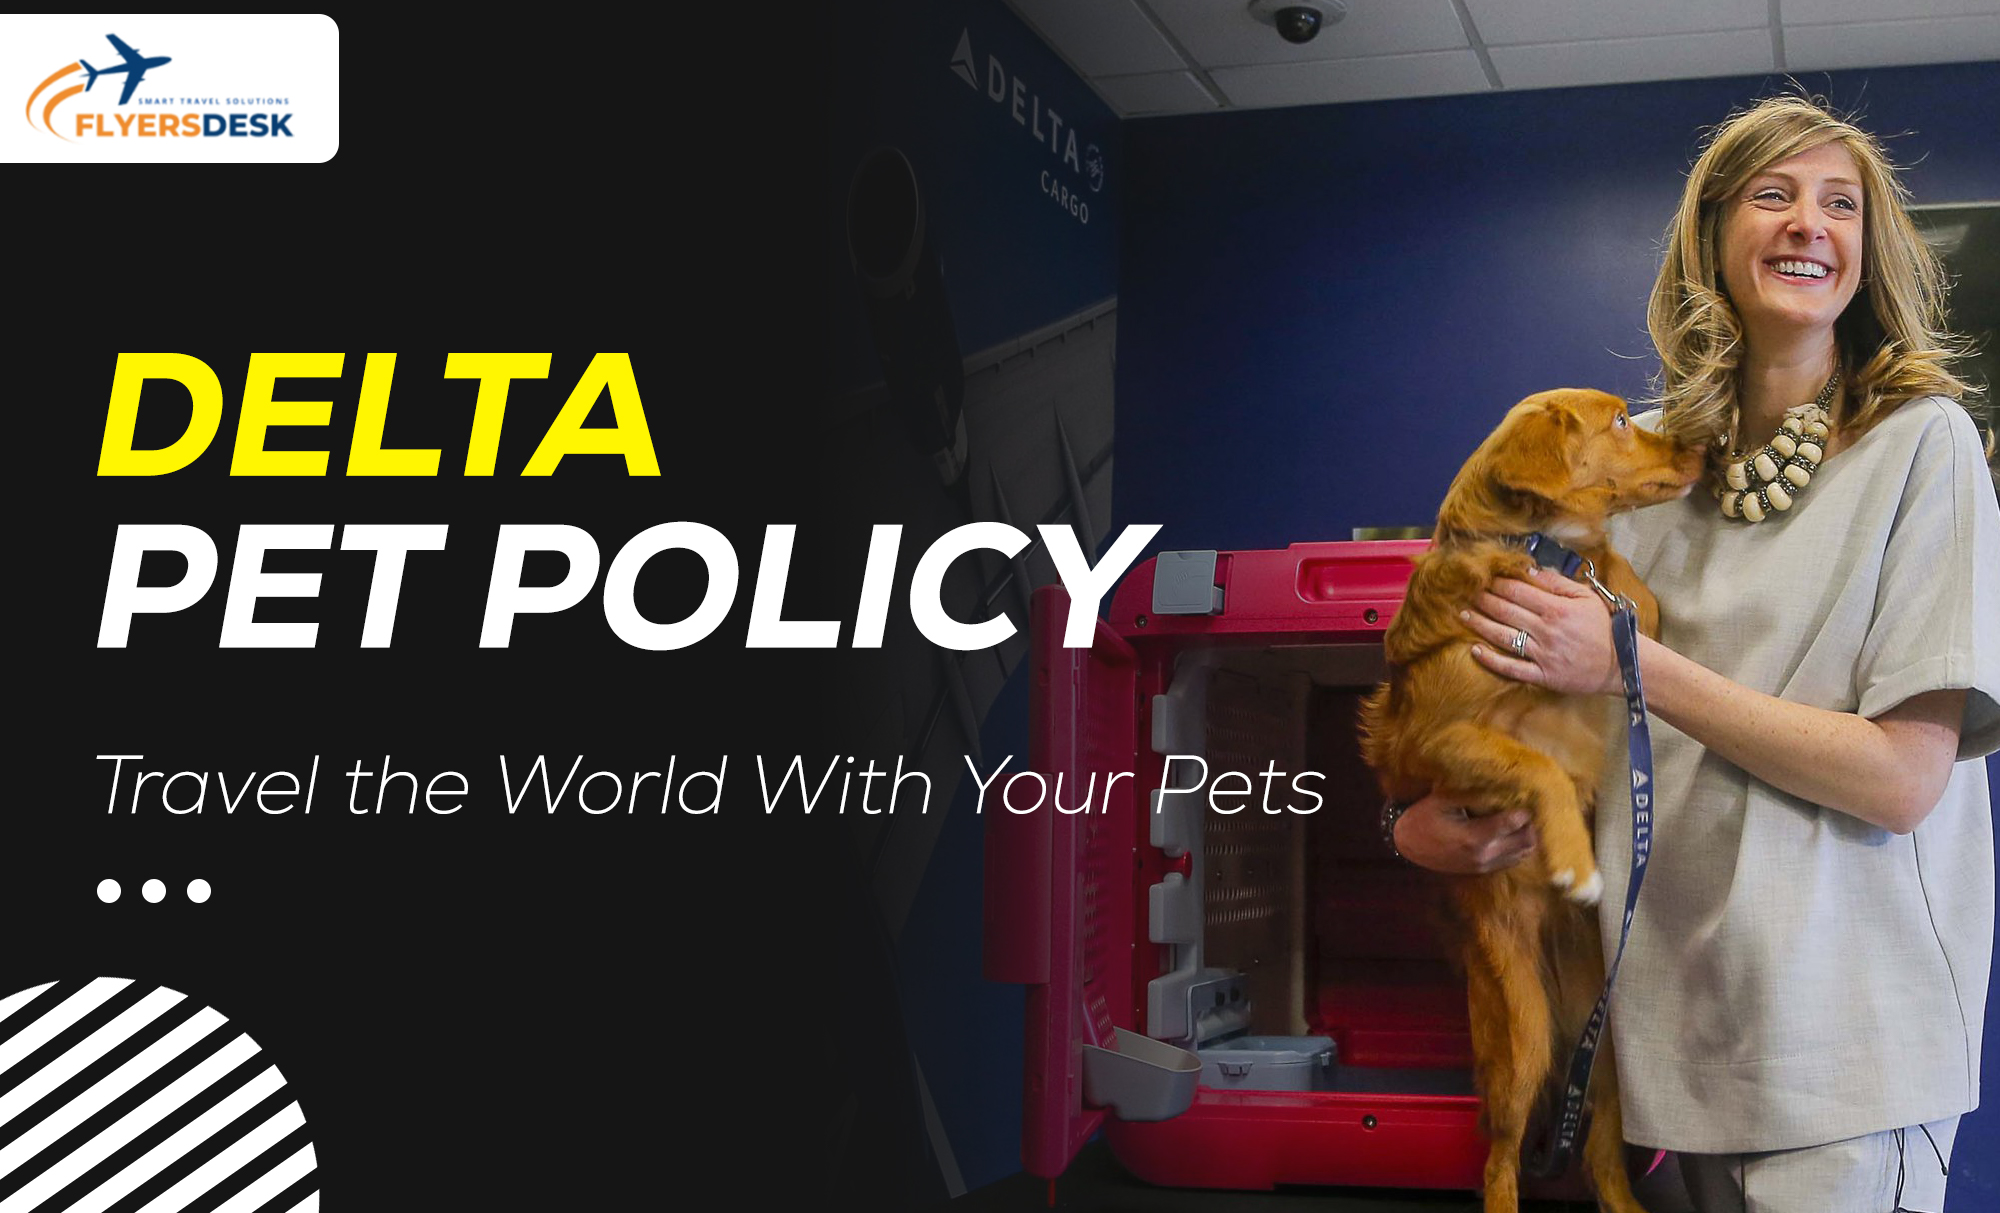 Delta pet policy